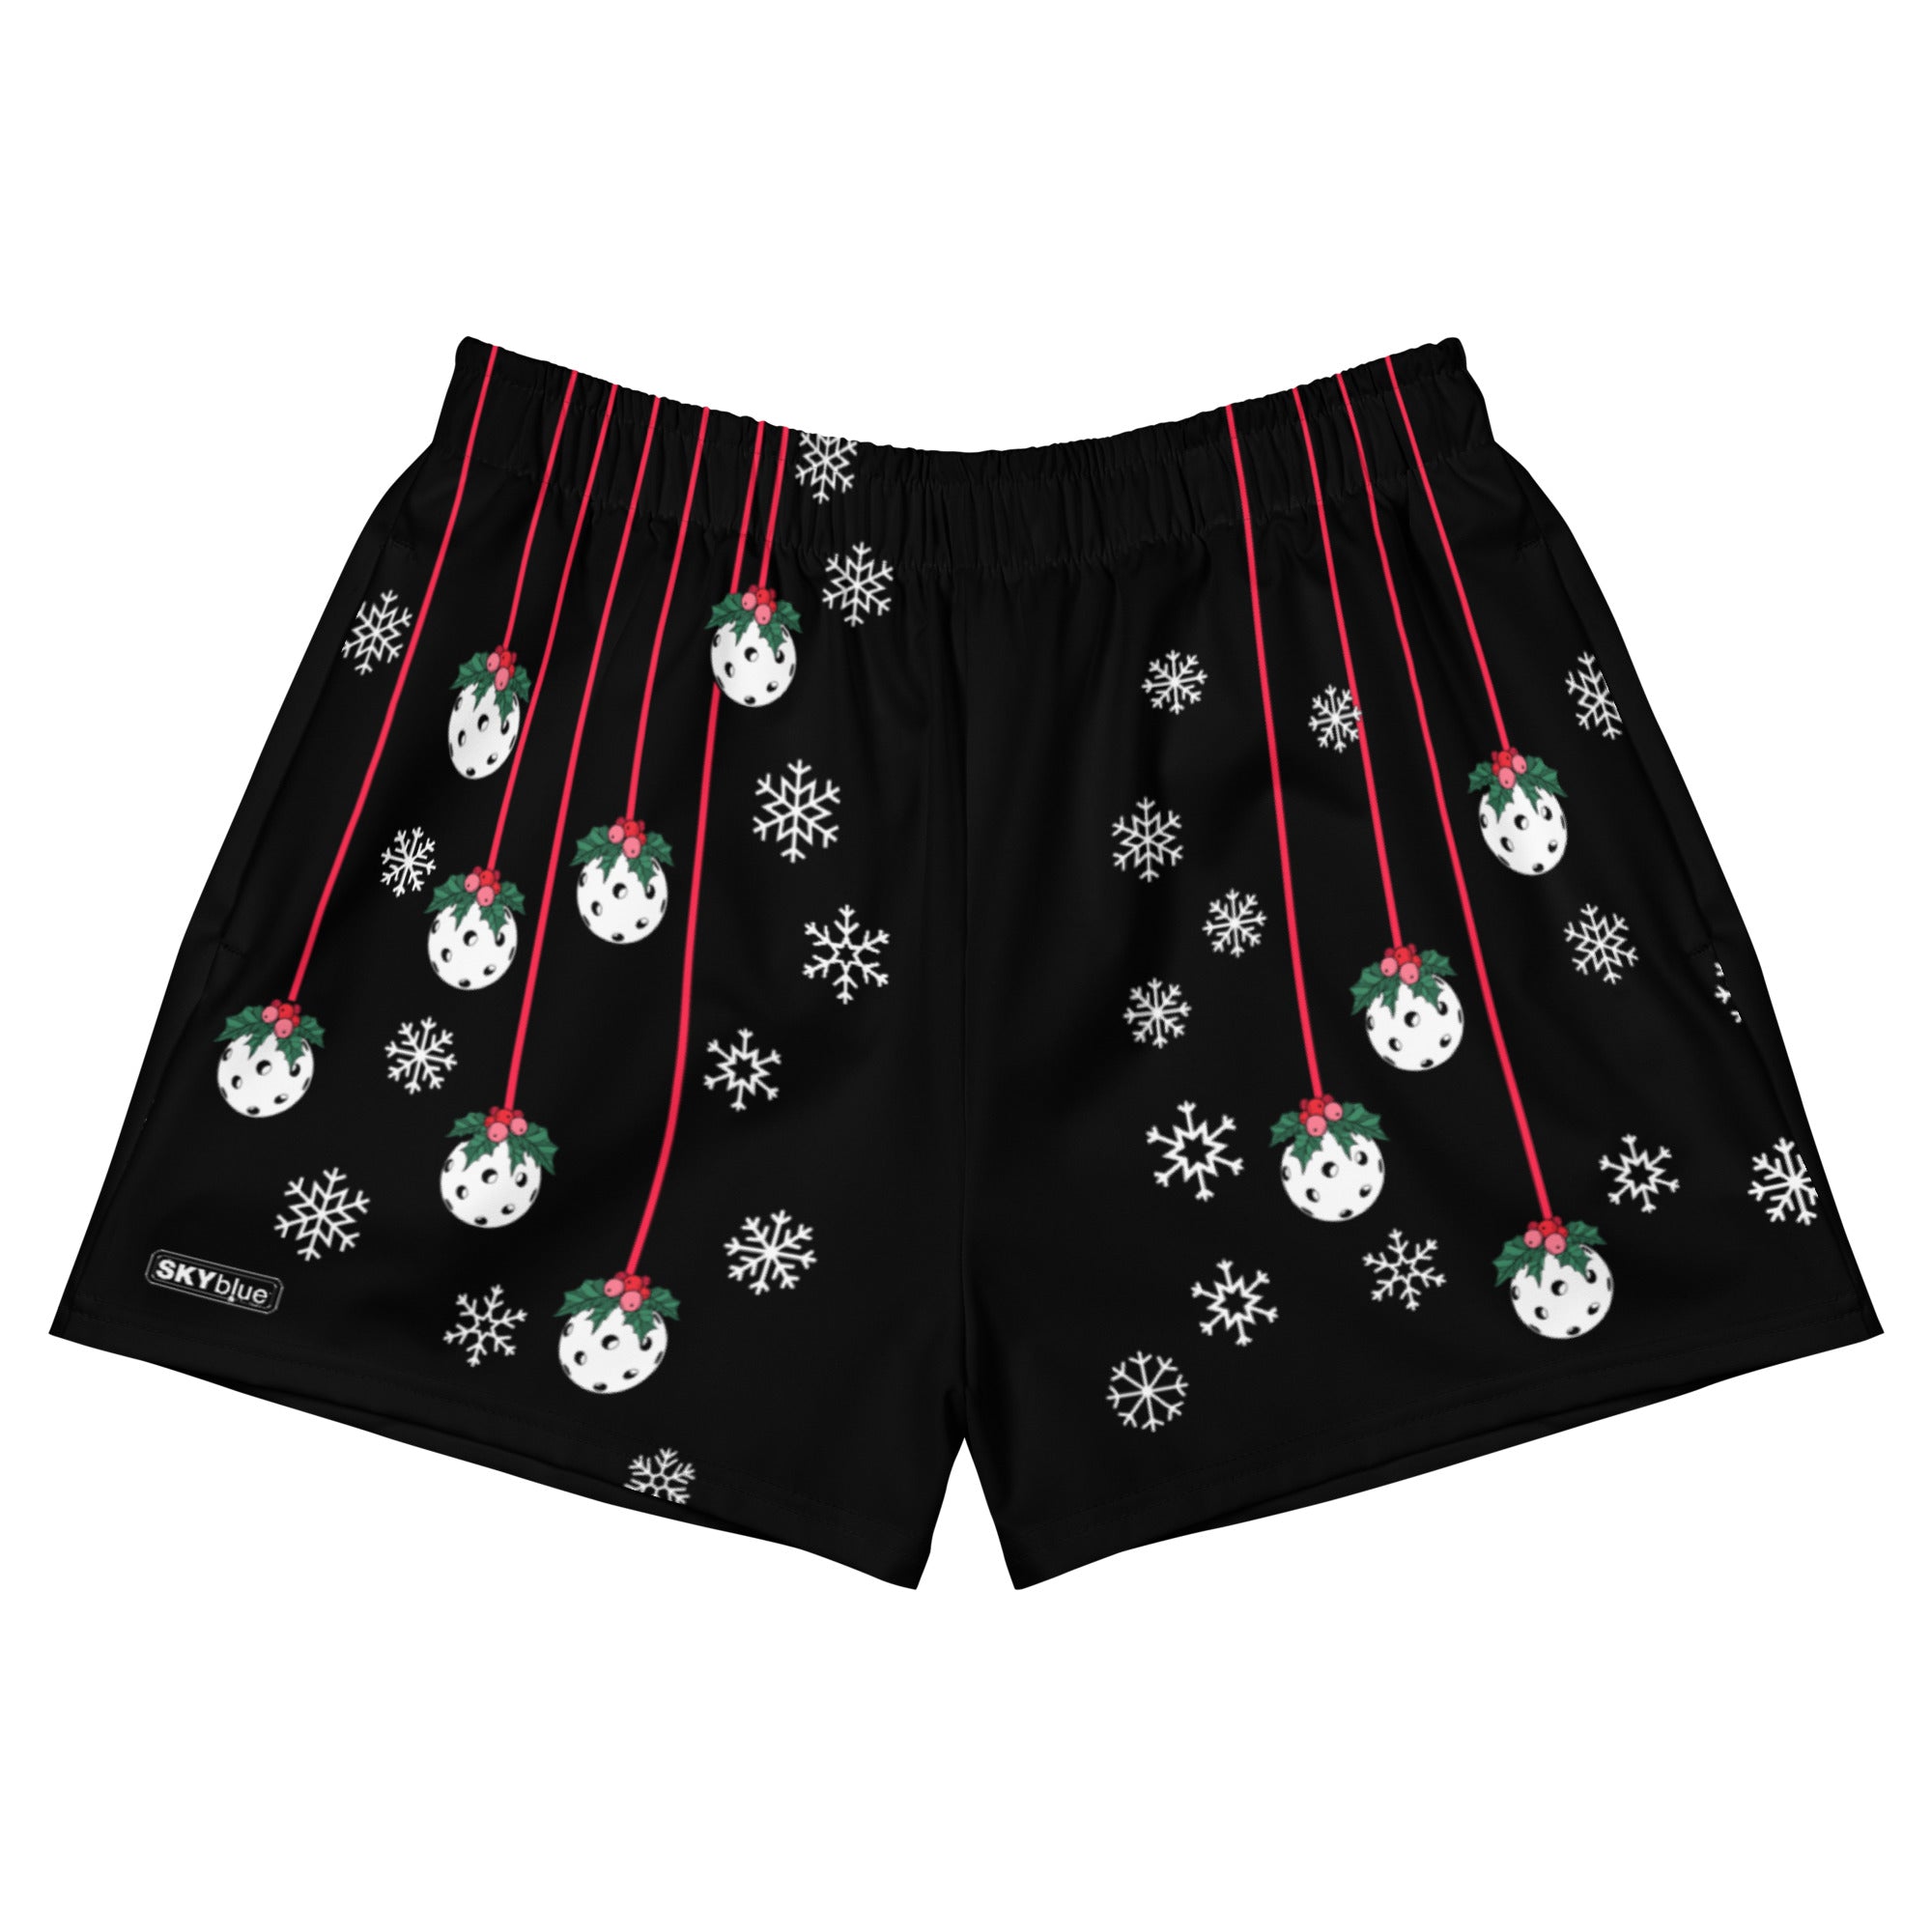 Holly Pickleball© Women's Pickleball Athletic Short Shorts w/pockets